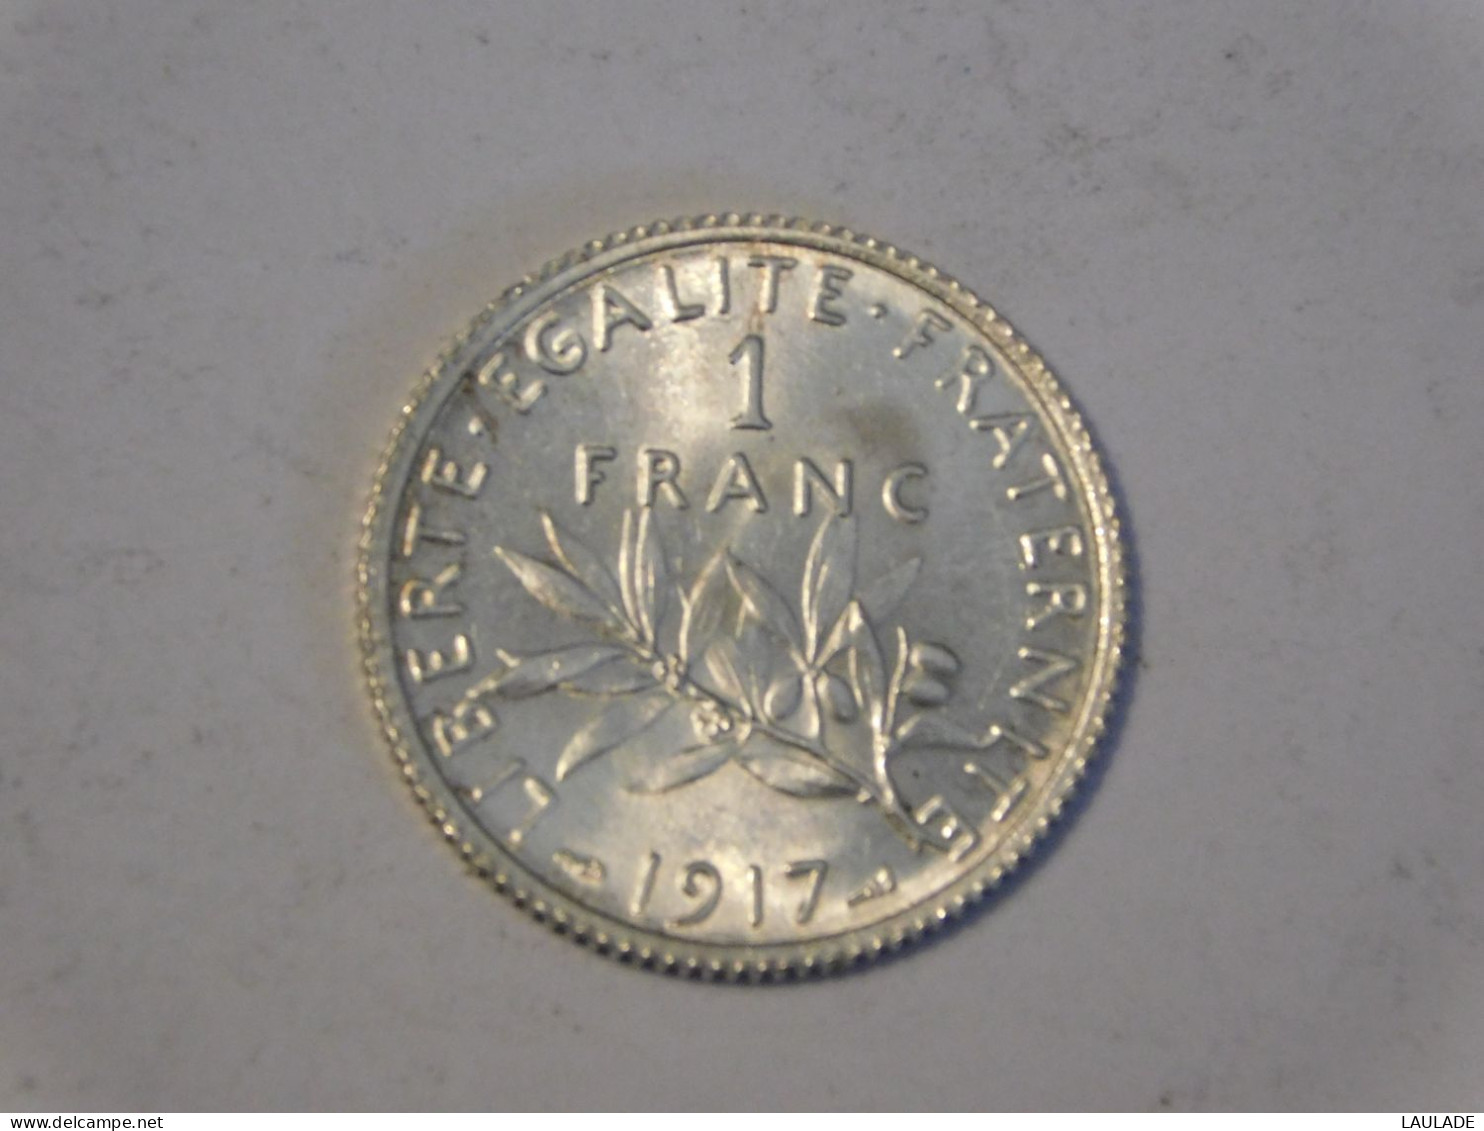 France 1 franc 1917 FDC Silver argent